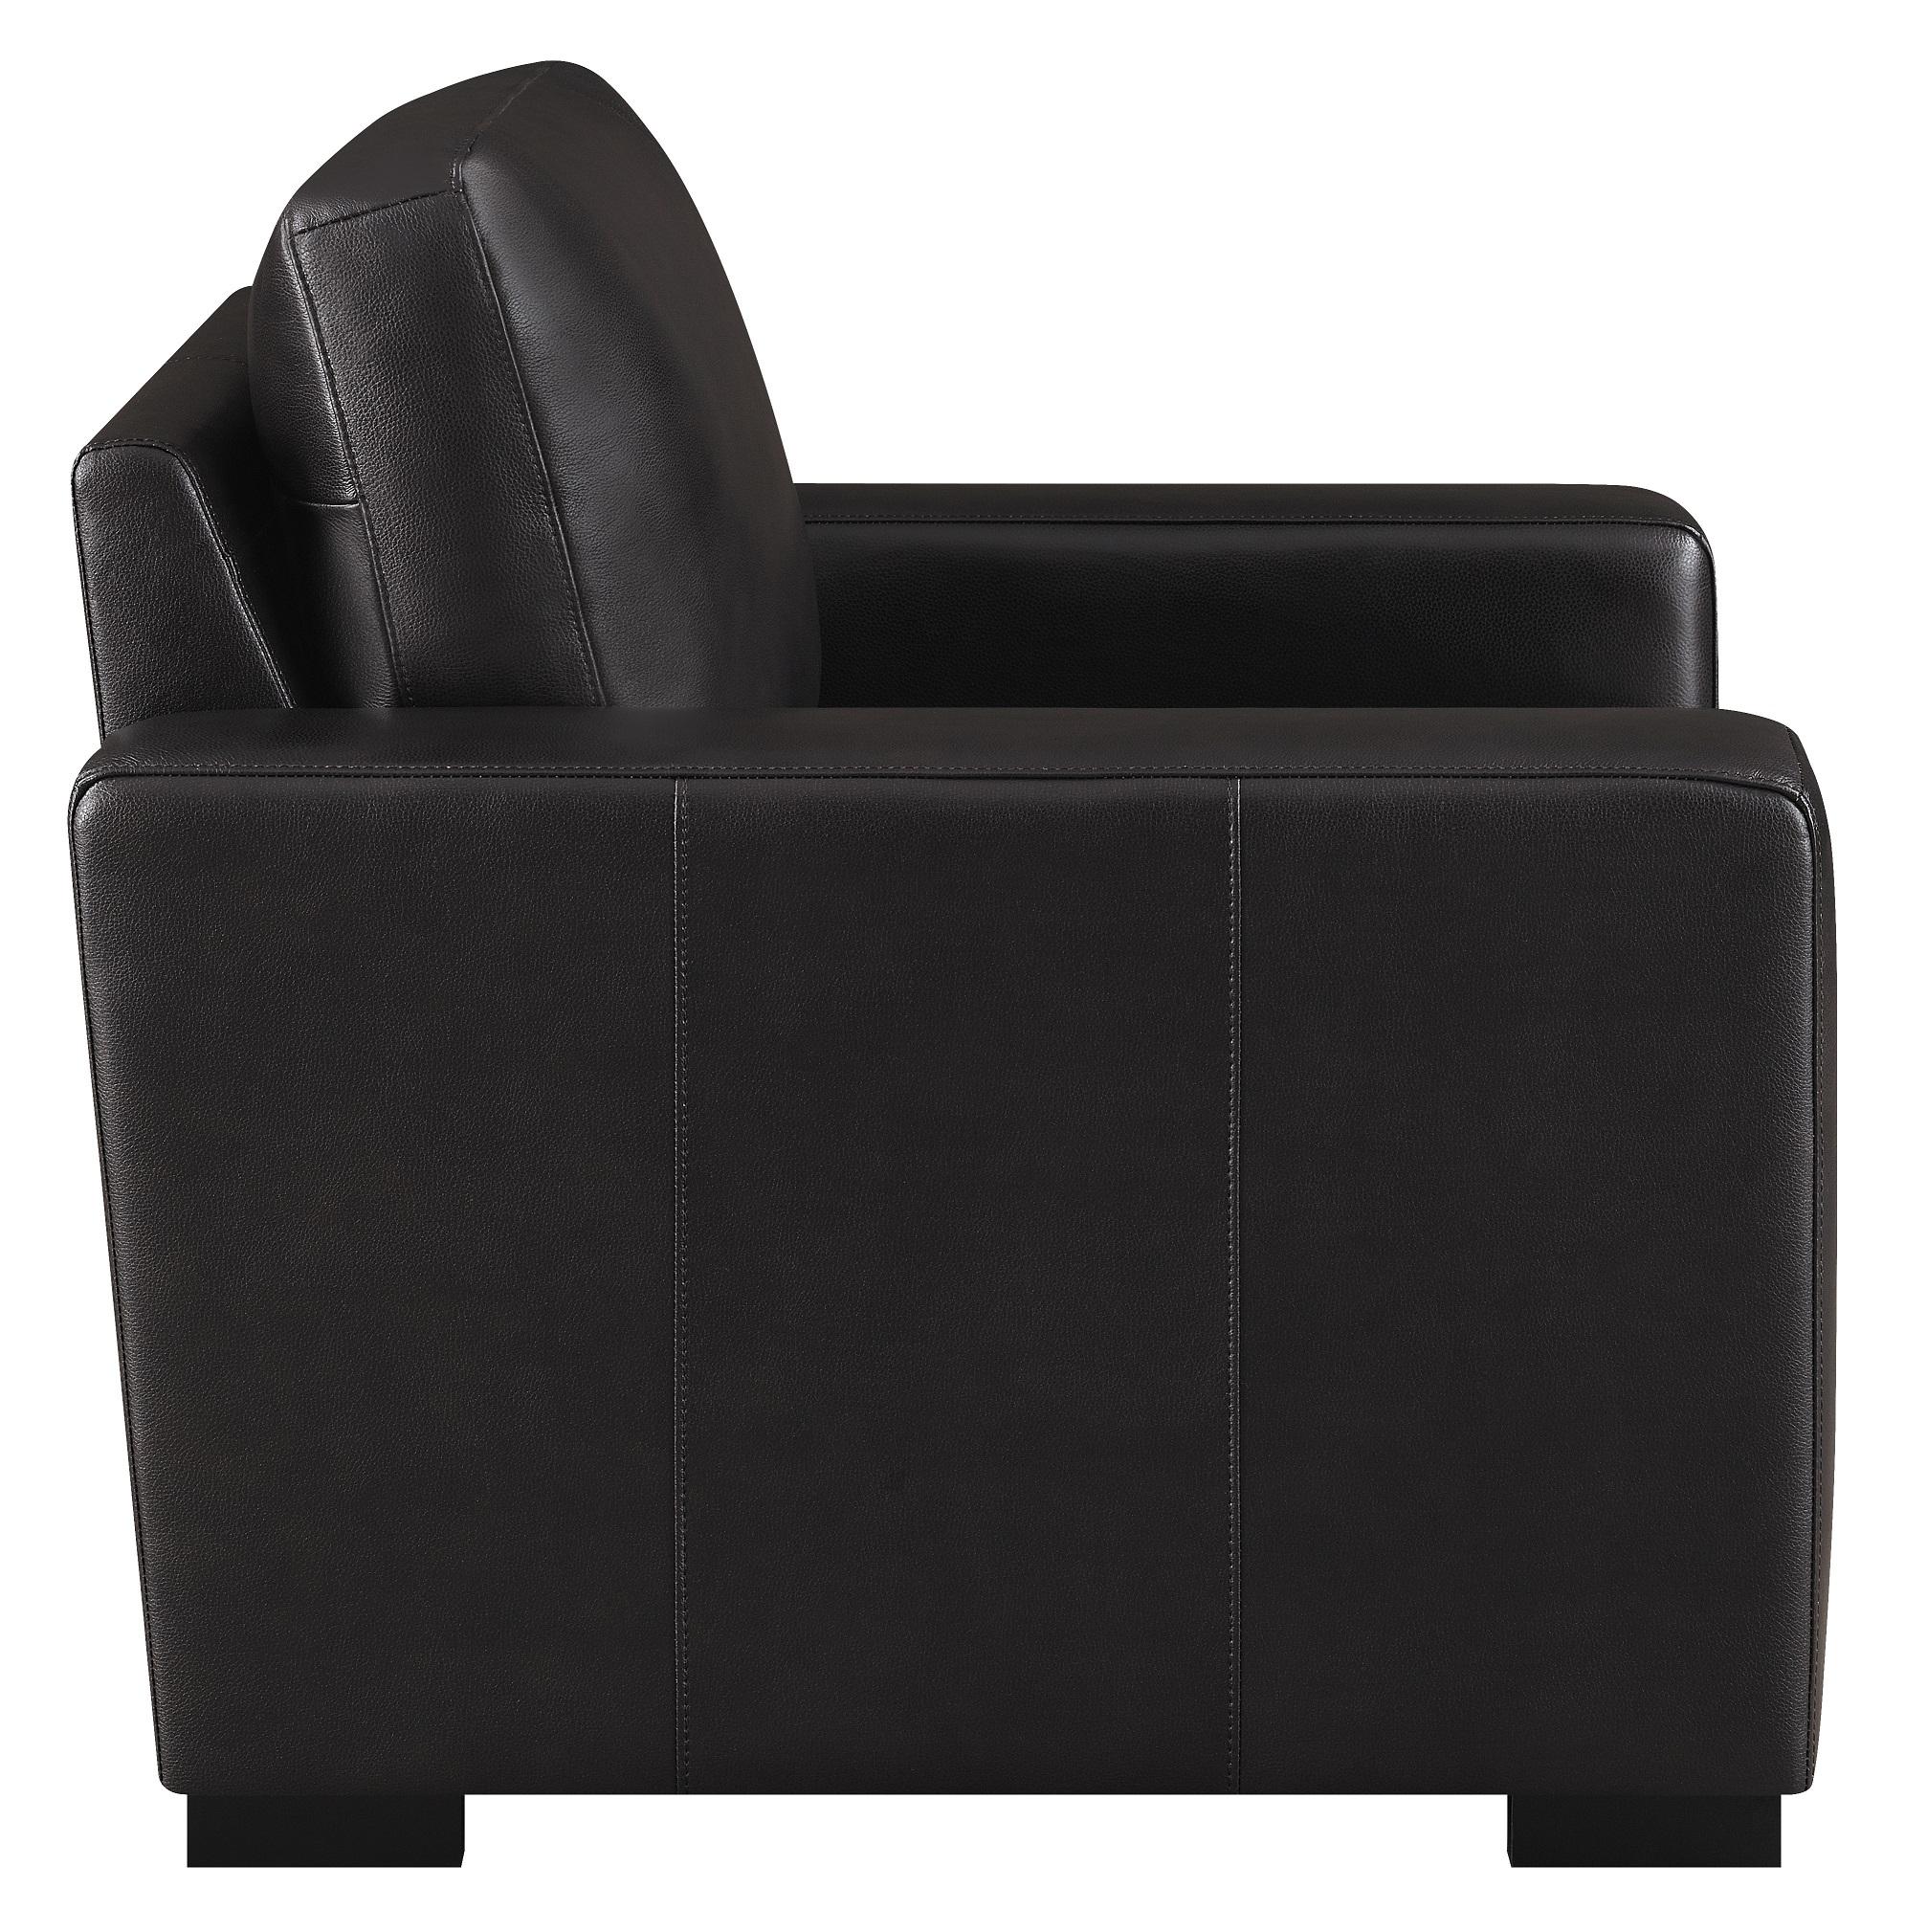 

    
Coaster 506803 Boardmead Arm Chair Dark Brown 506803
